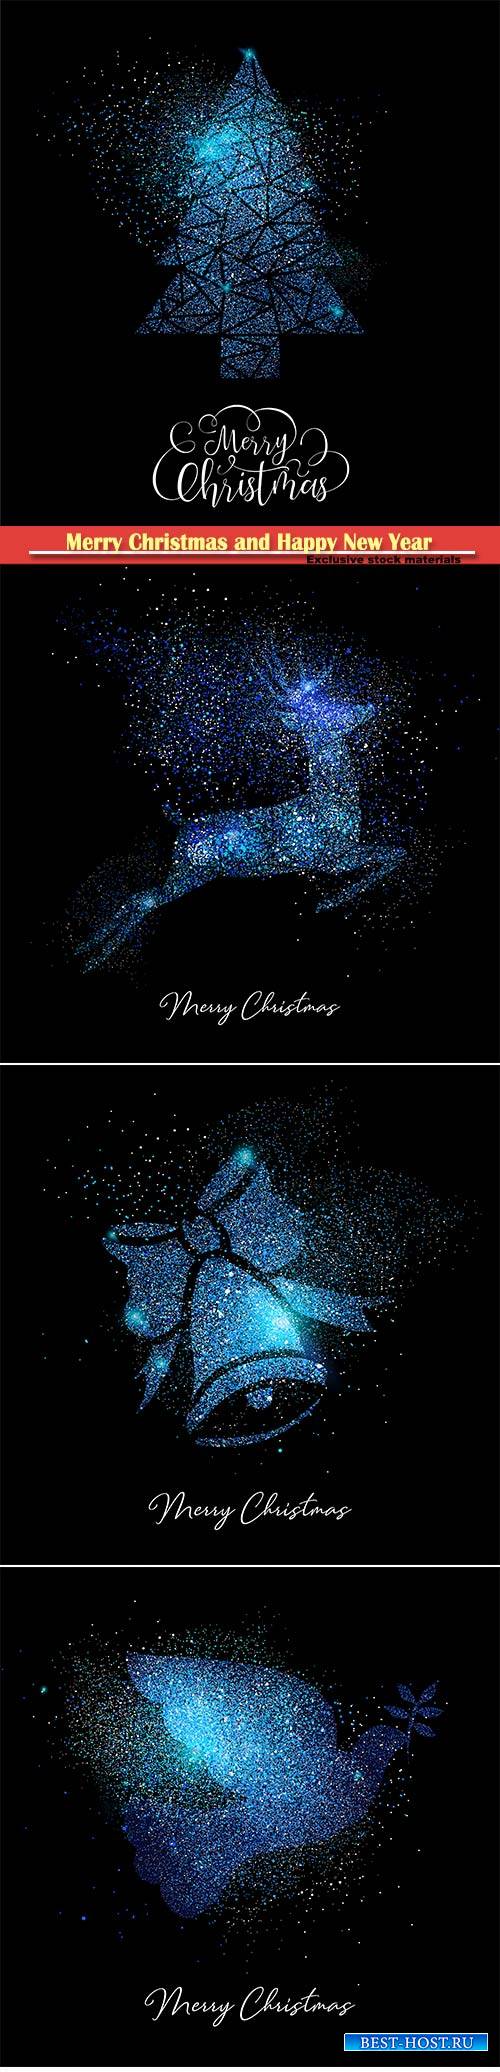 Merry Christmas blue glitter greeting vector card